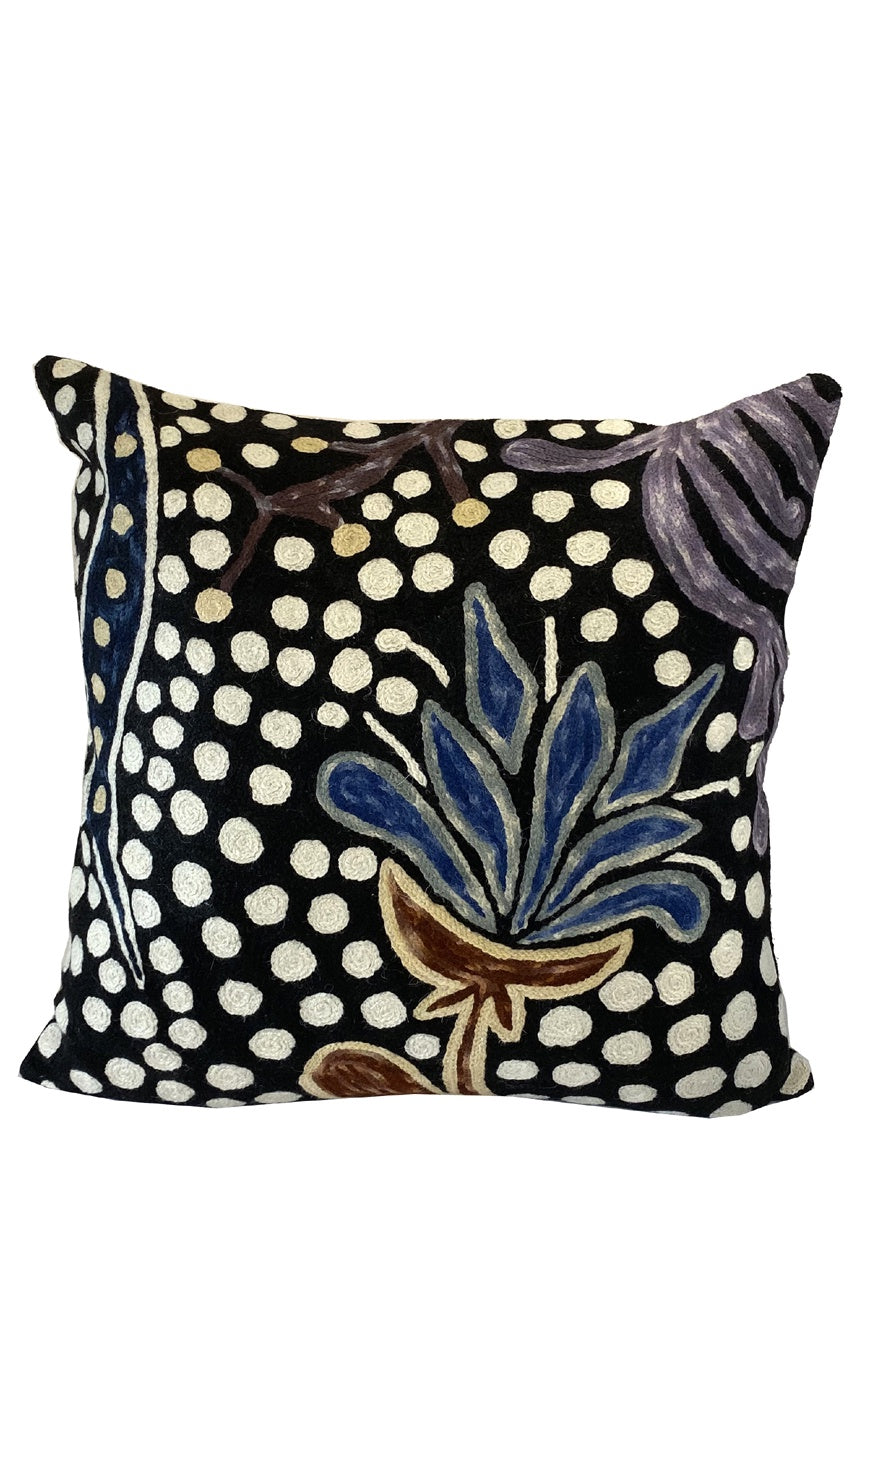 Aboriginal Art Cushion Cover by Bianca Gardener Dodd (3)